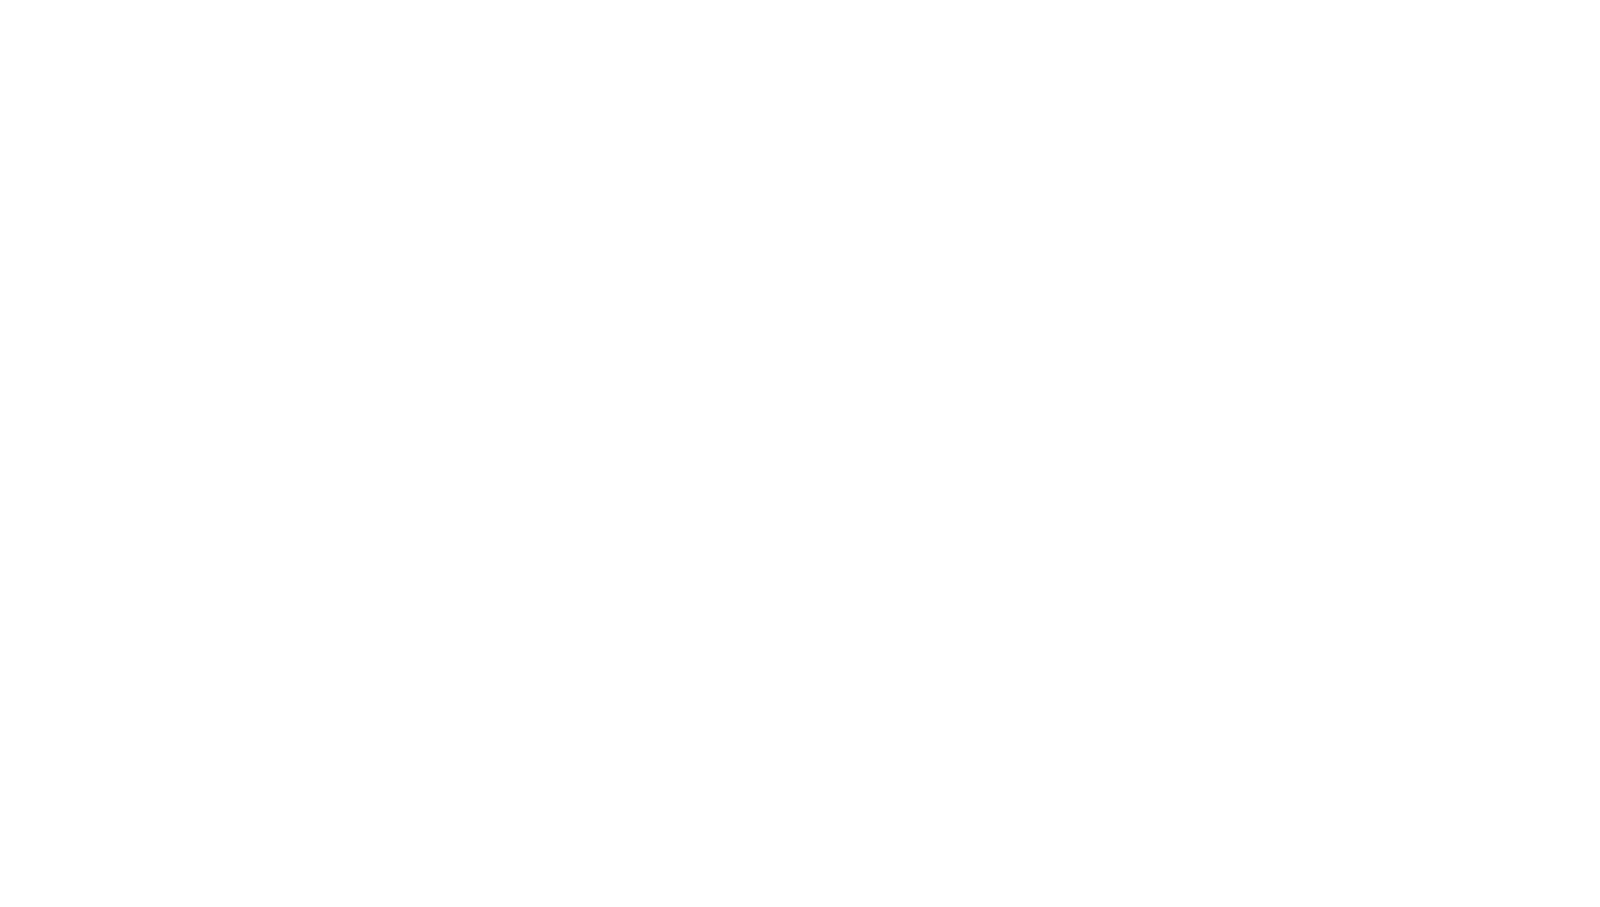 Transform A Street Dog